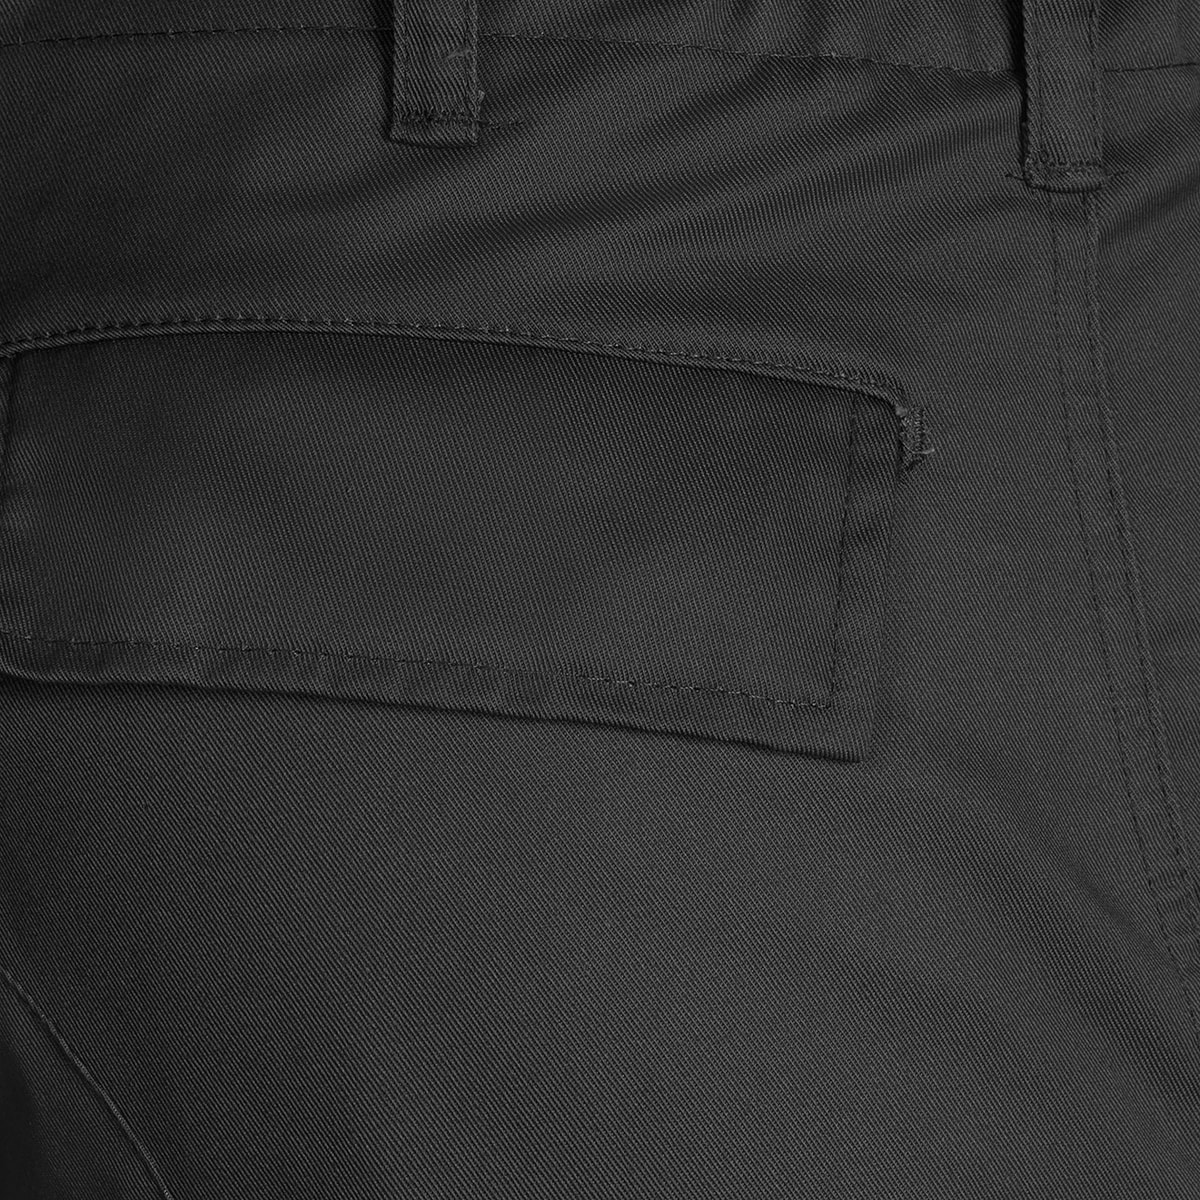 Трекінгові штани 2в1 Mil-Tec BDU Zip-Off - Black